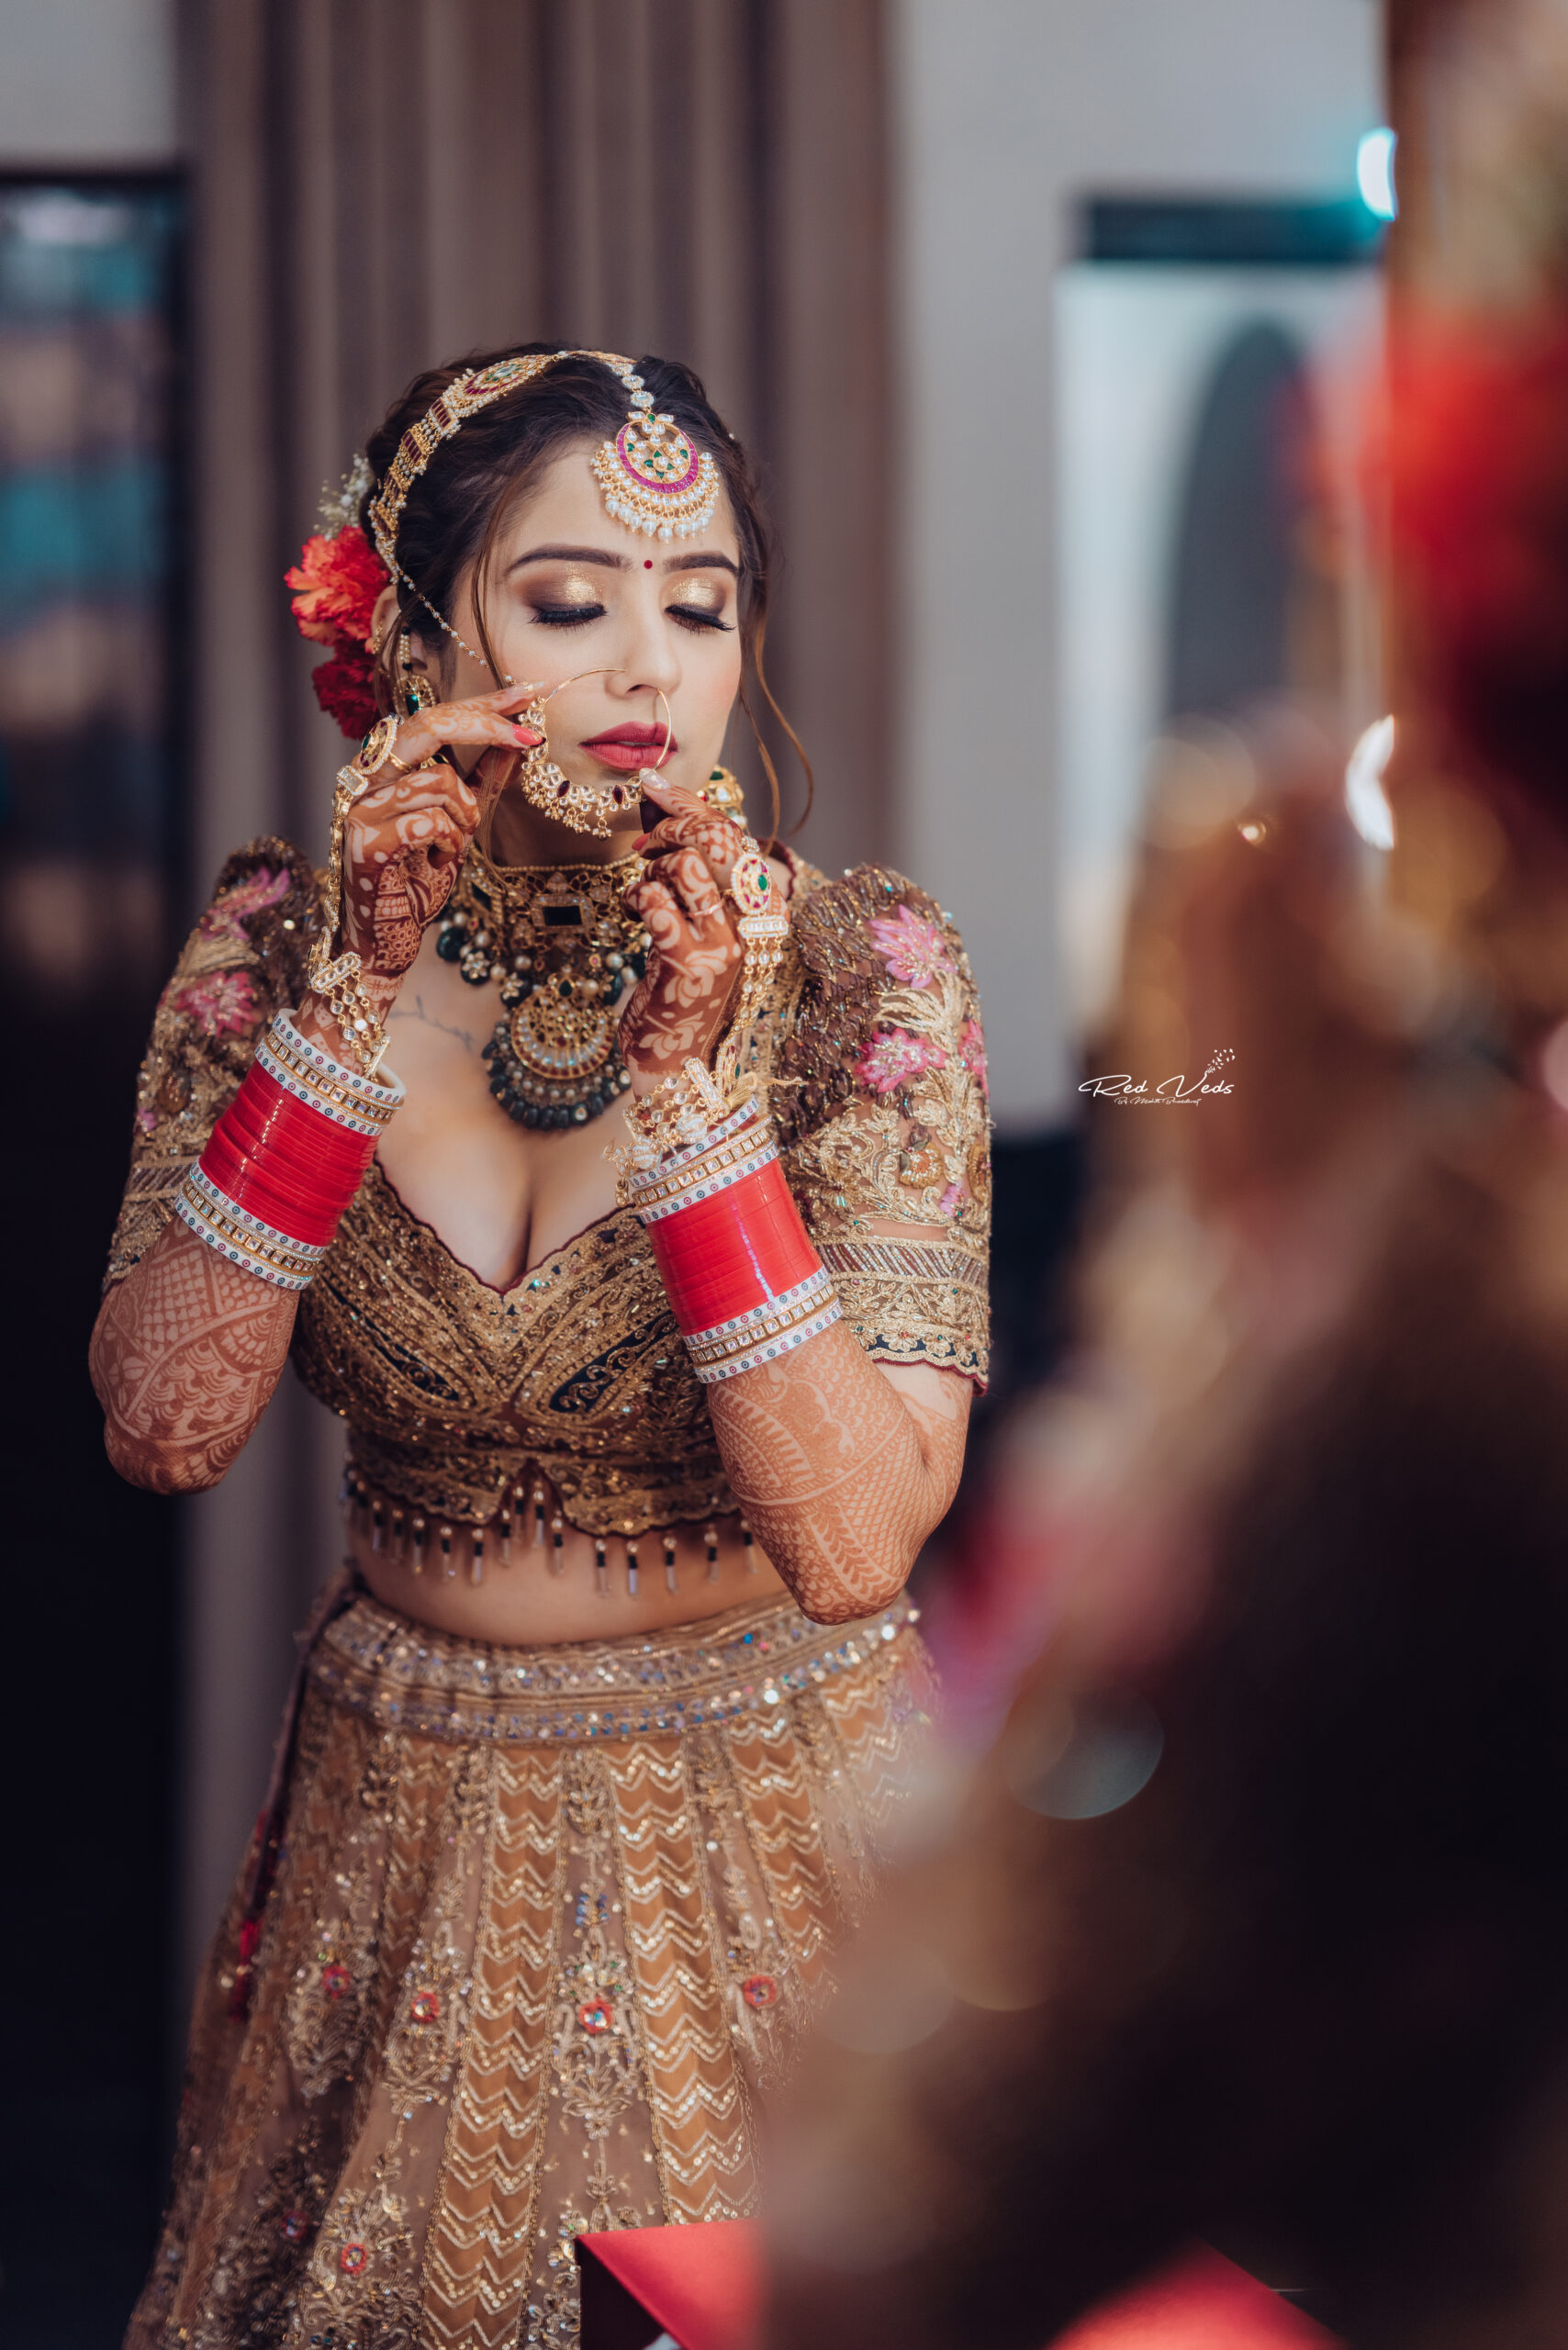 Pin by kohansi arela on classic wedding dress | Indian bride poses, Indian  wedding photography poses, Indian bride photography poses